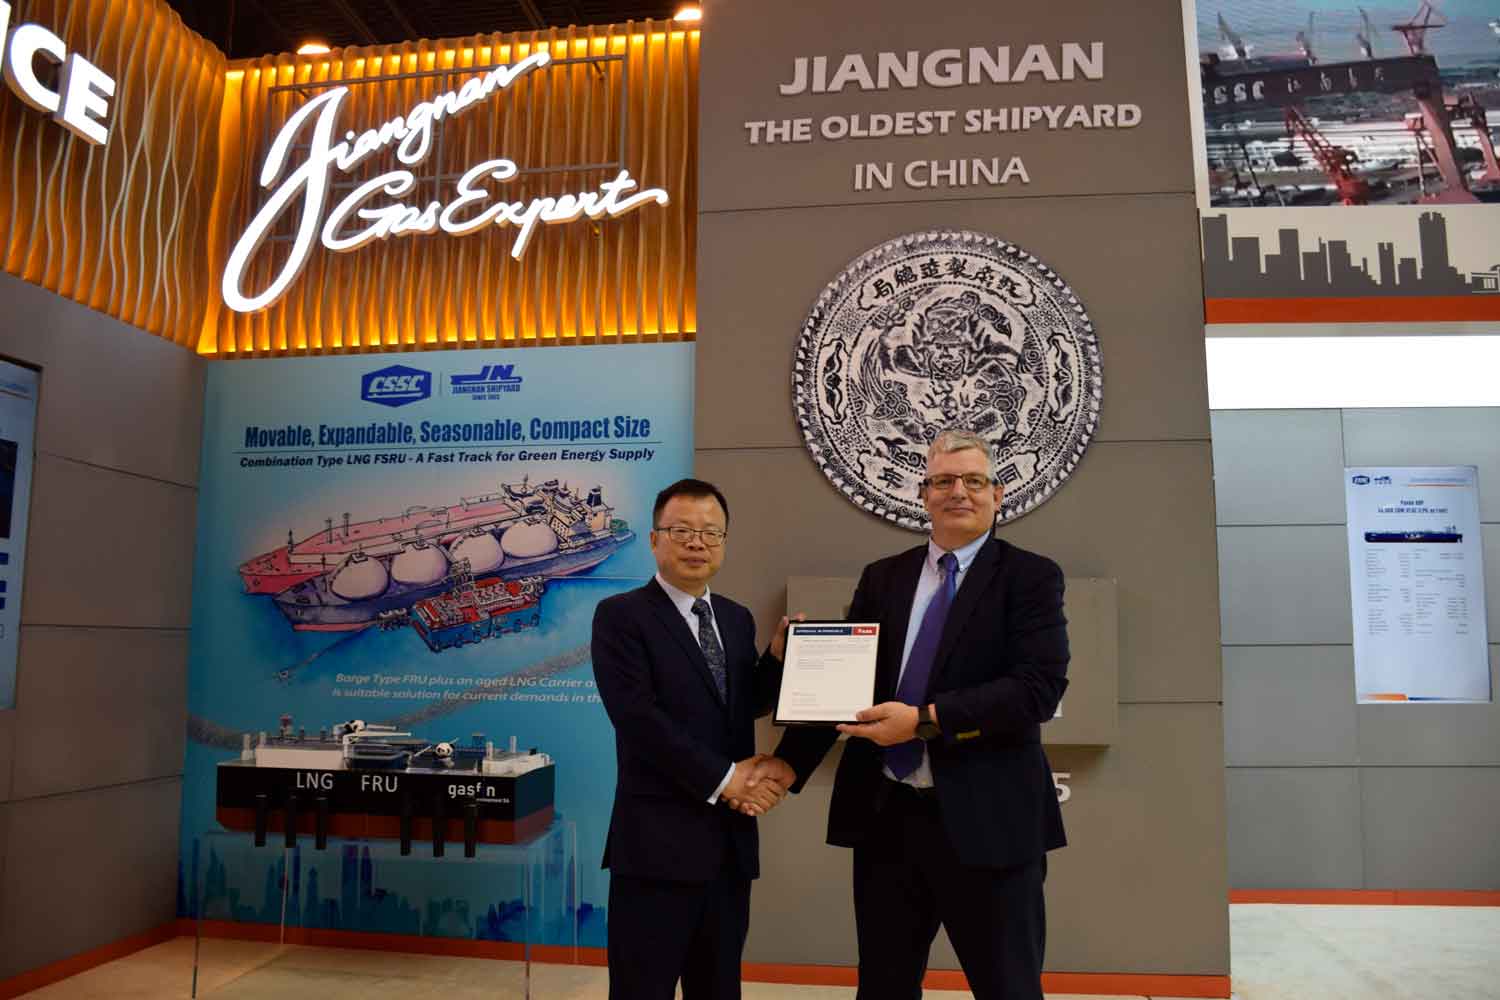 Jiangnan Shipyard, ABS Approval in Principle